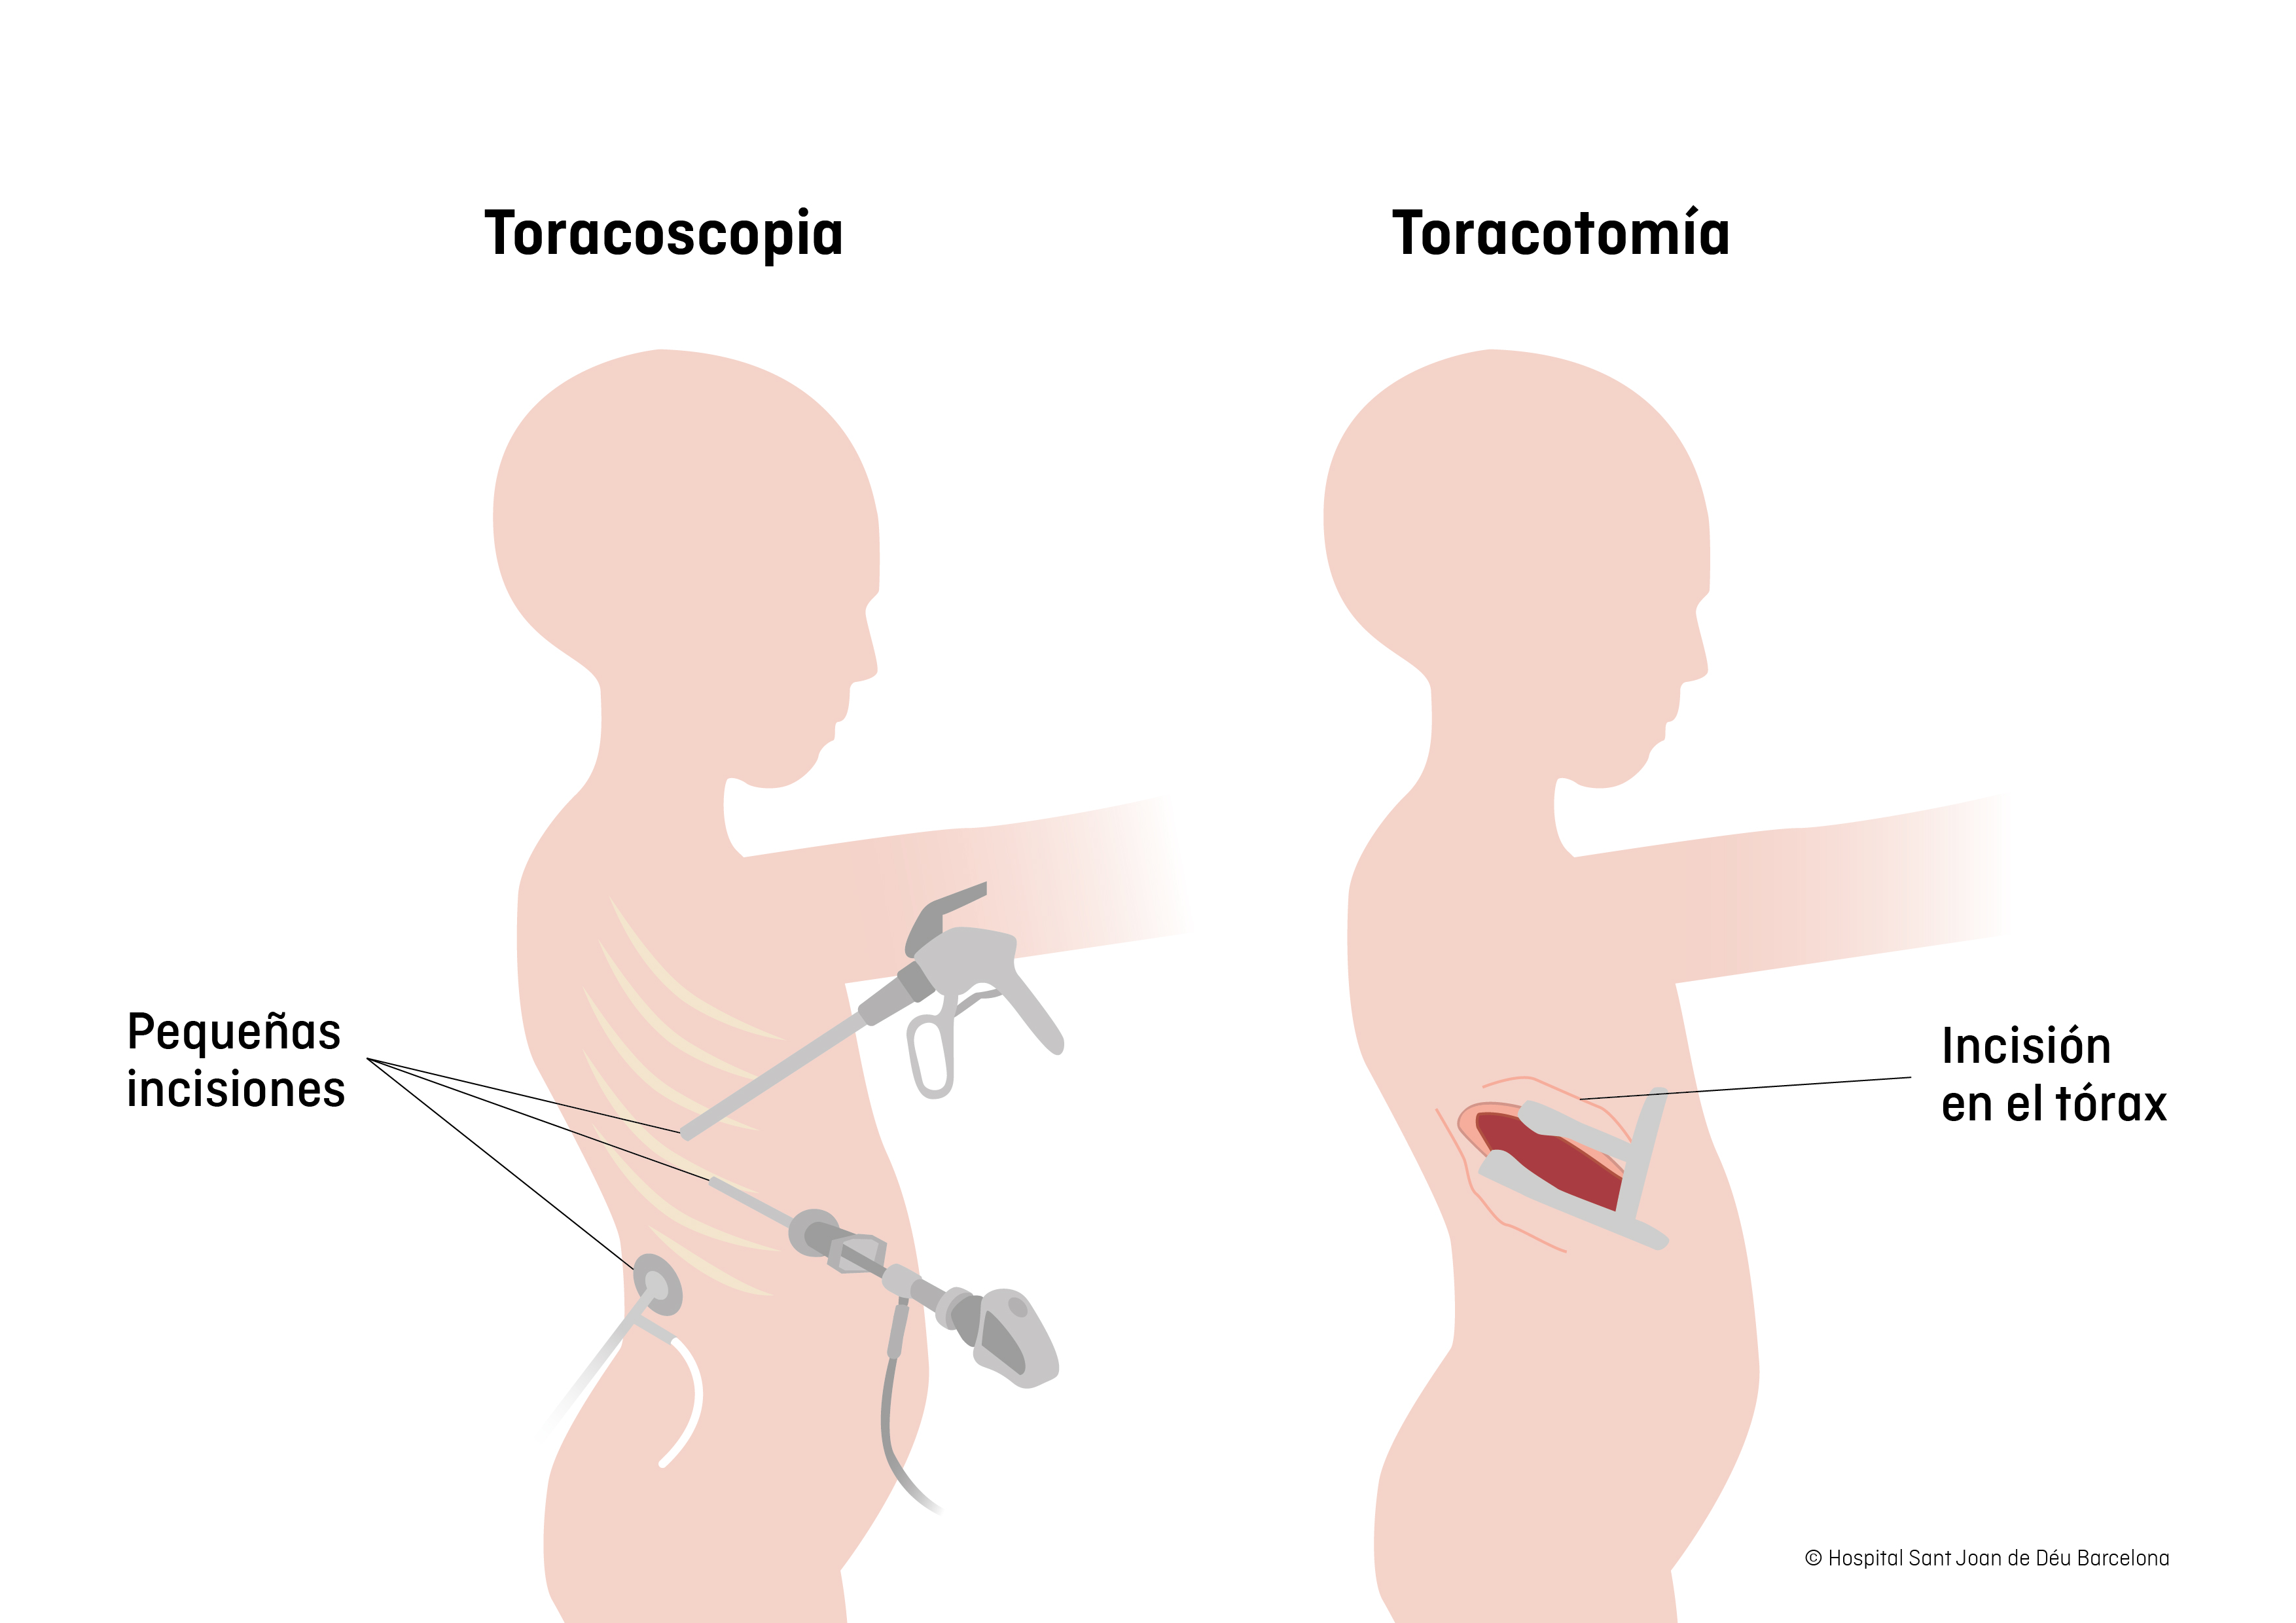 Toracoscopia y toracotomia